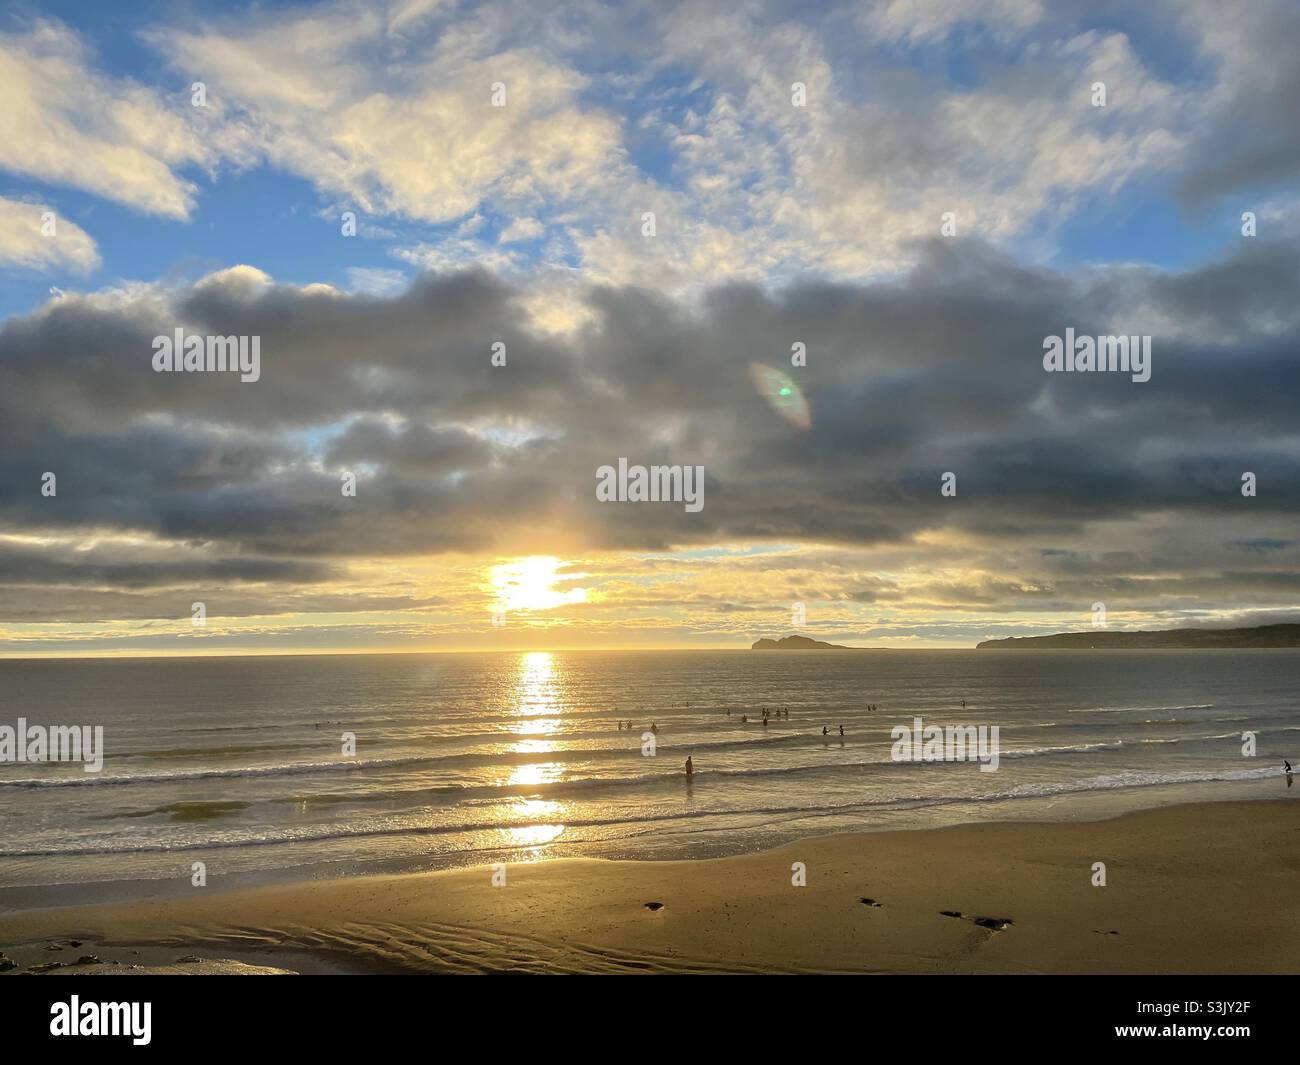 Morning scene at a beach Stock Photo